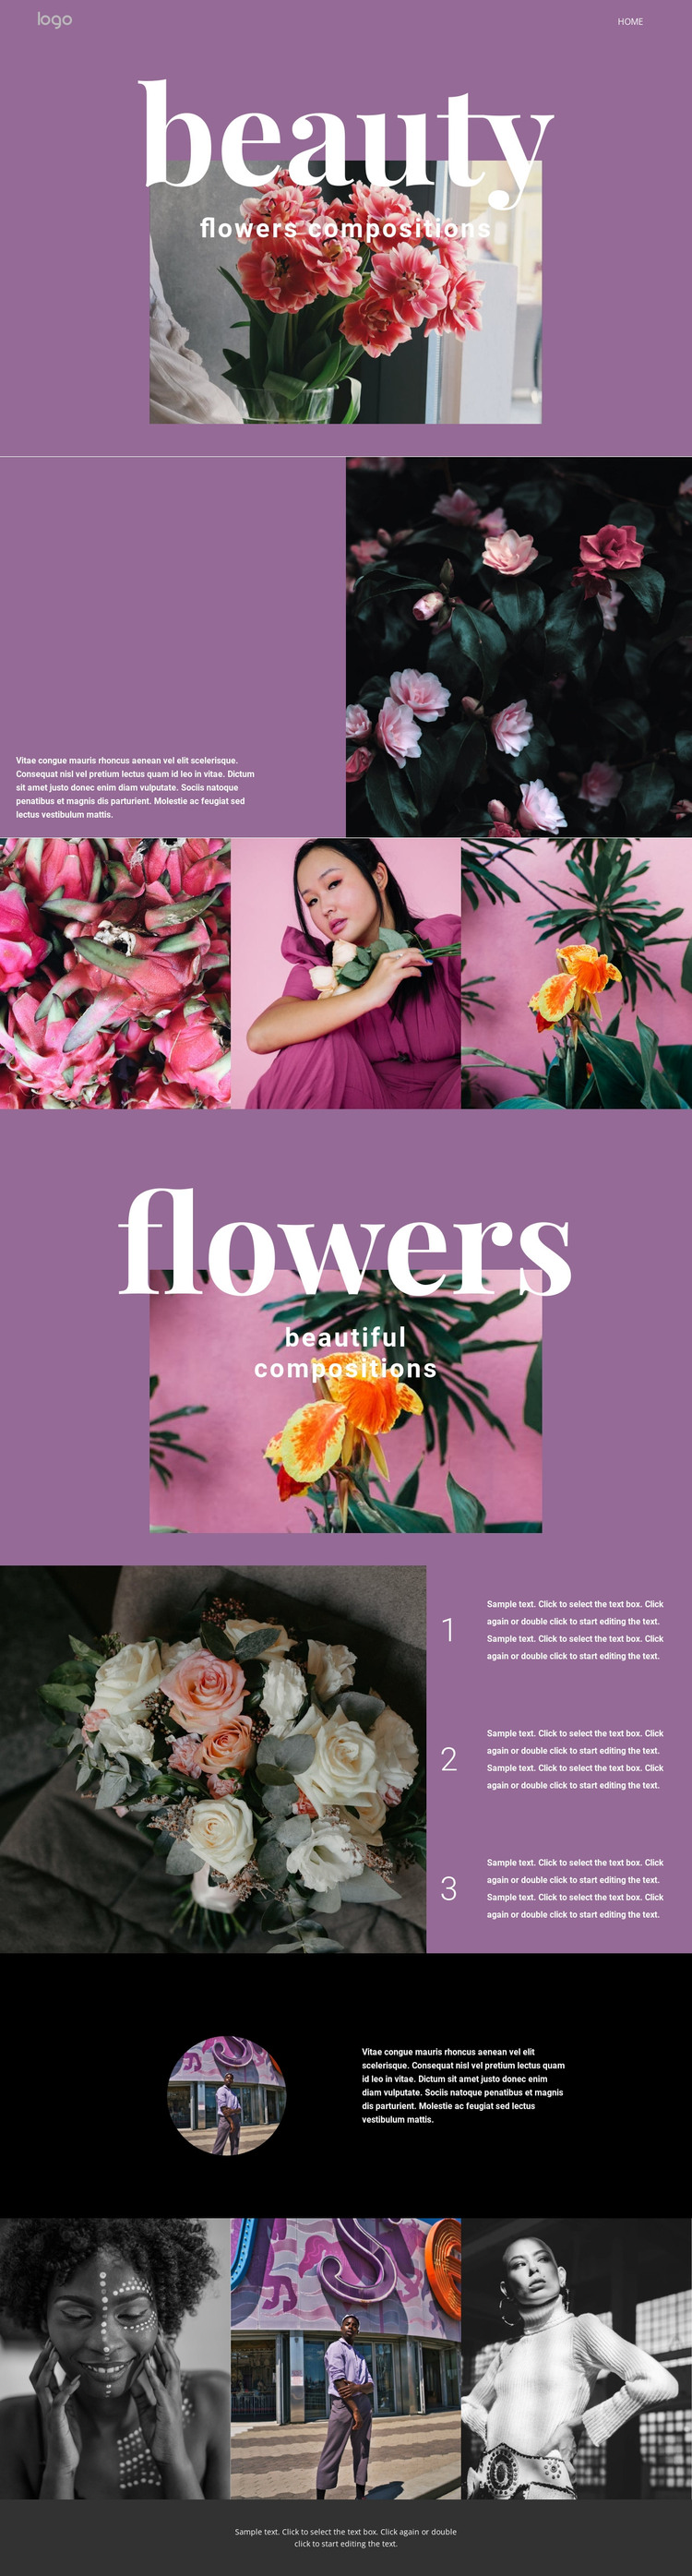 Flower salon WordPress Theme